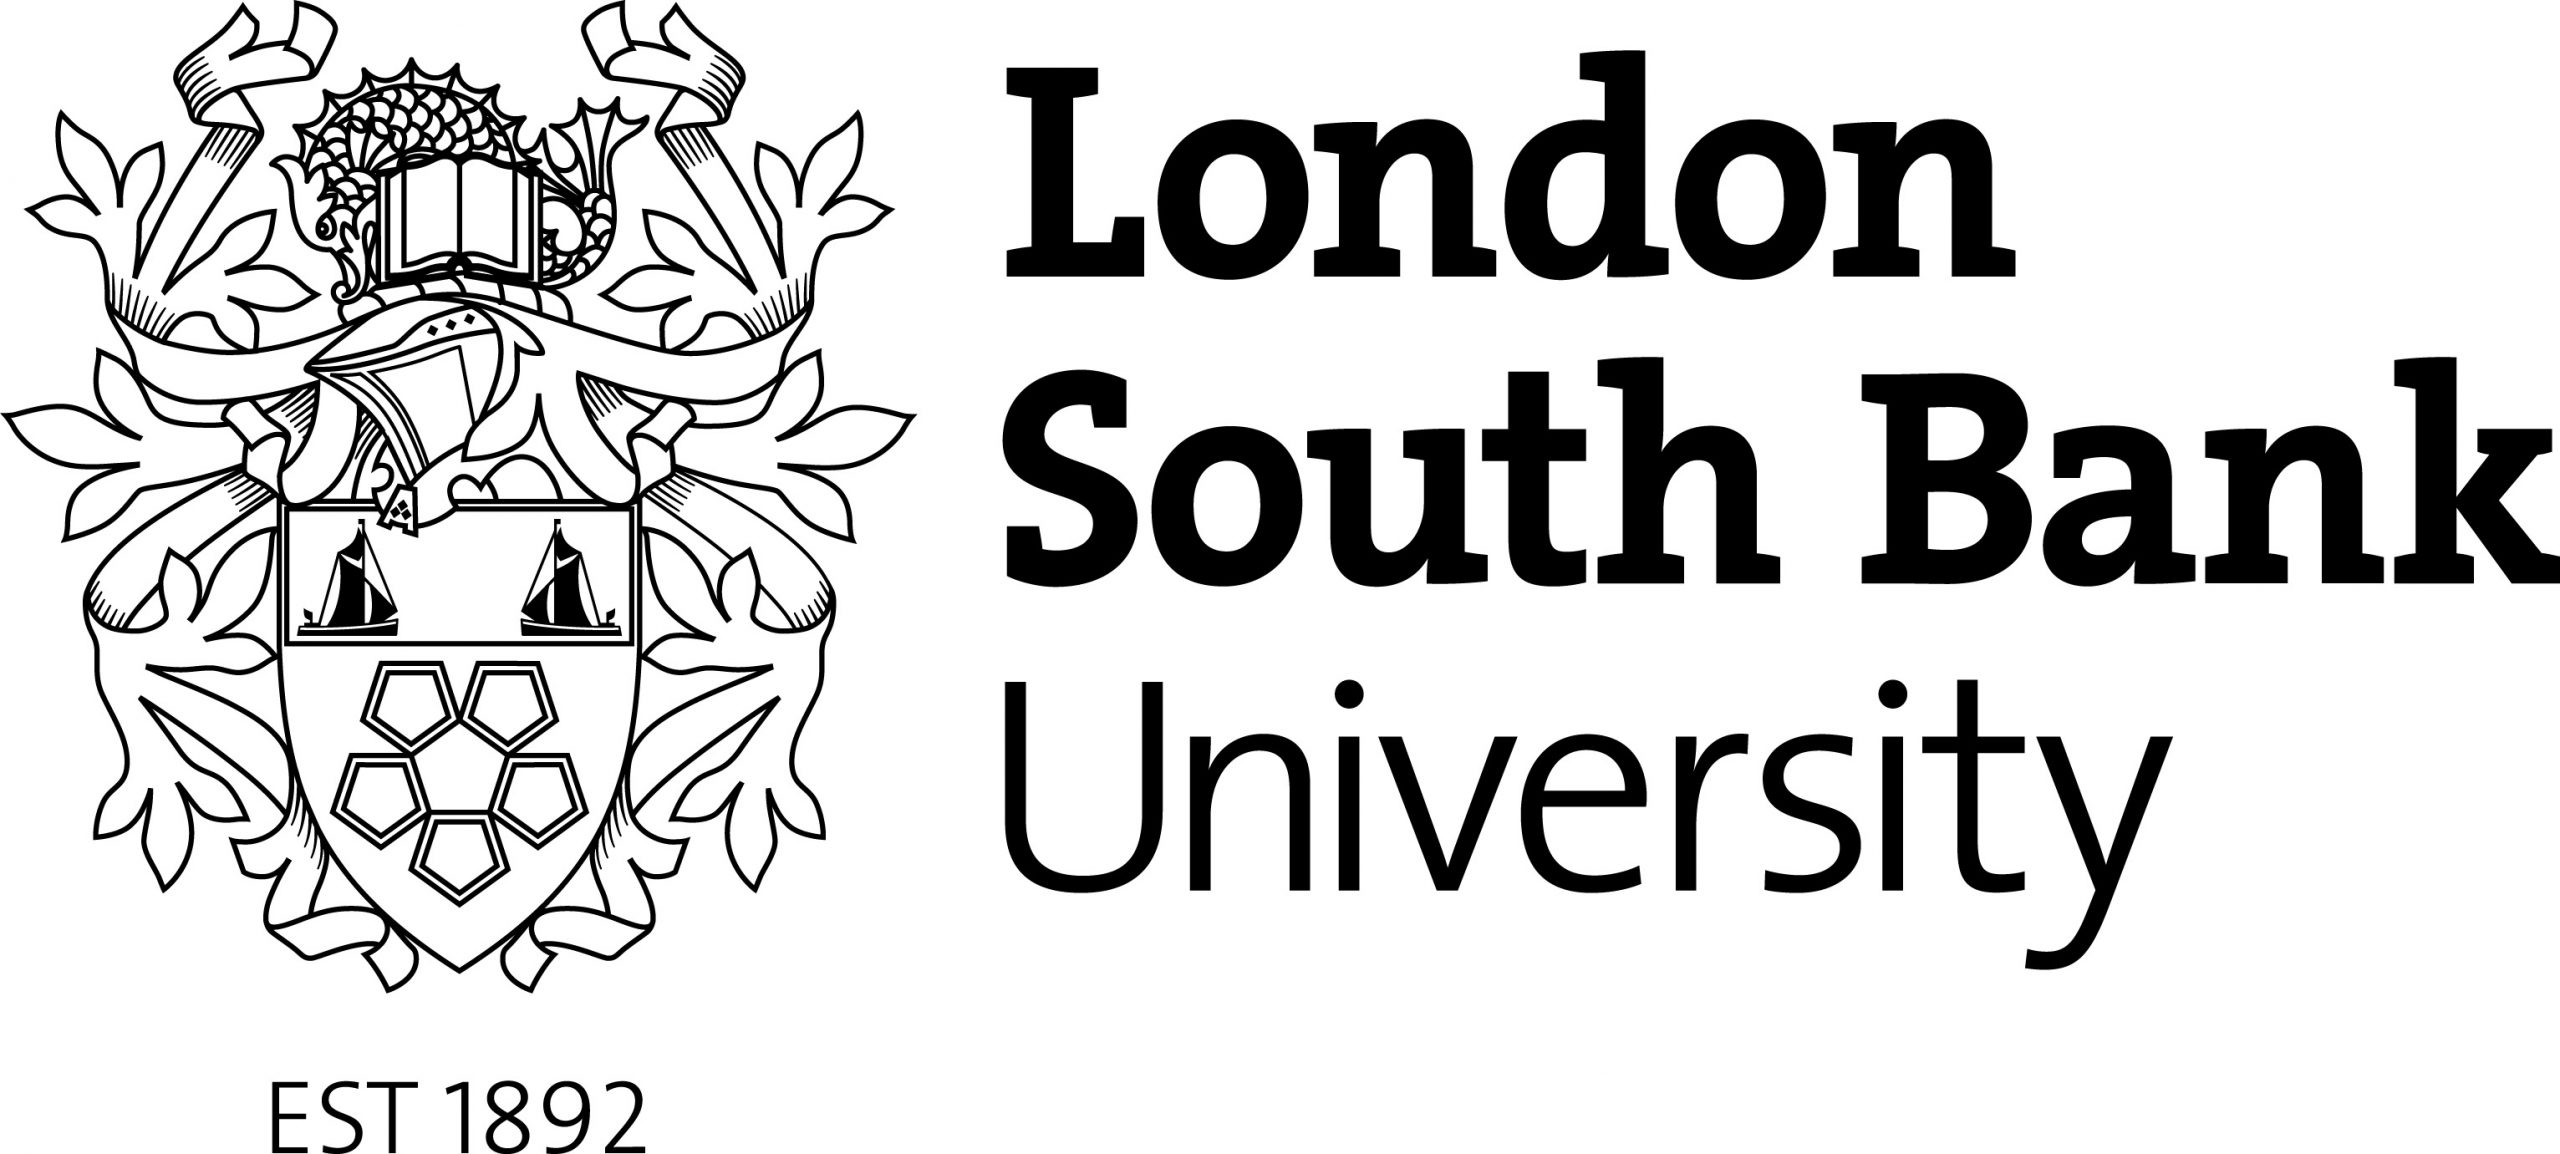 London South Bank University students win RIBA Master of Architecture awards  @RIBA_London @LSBU @LSBU_BEA